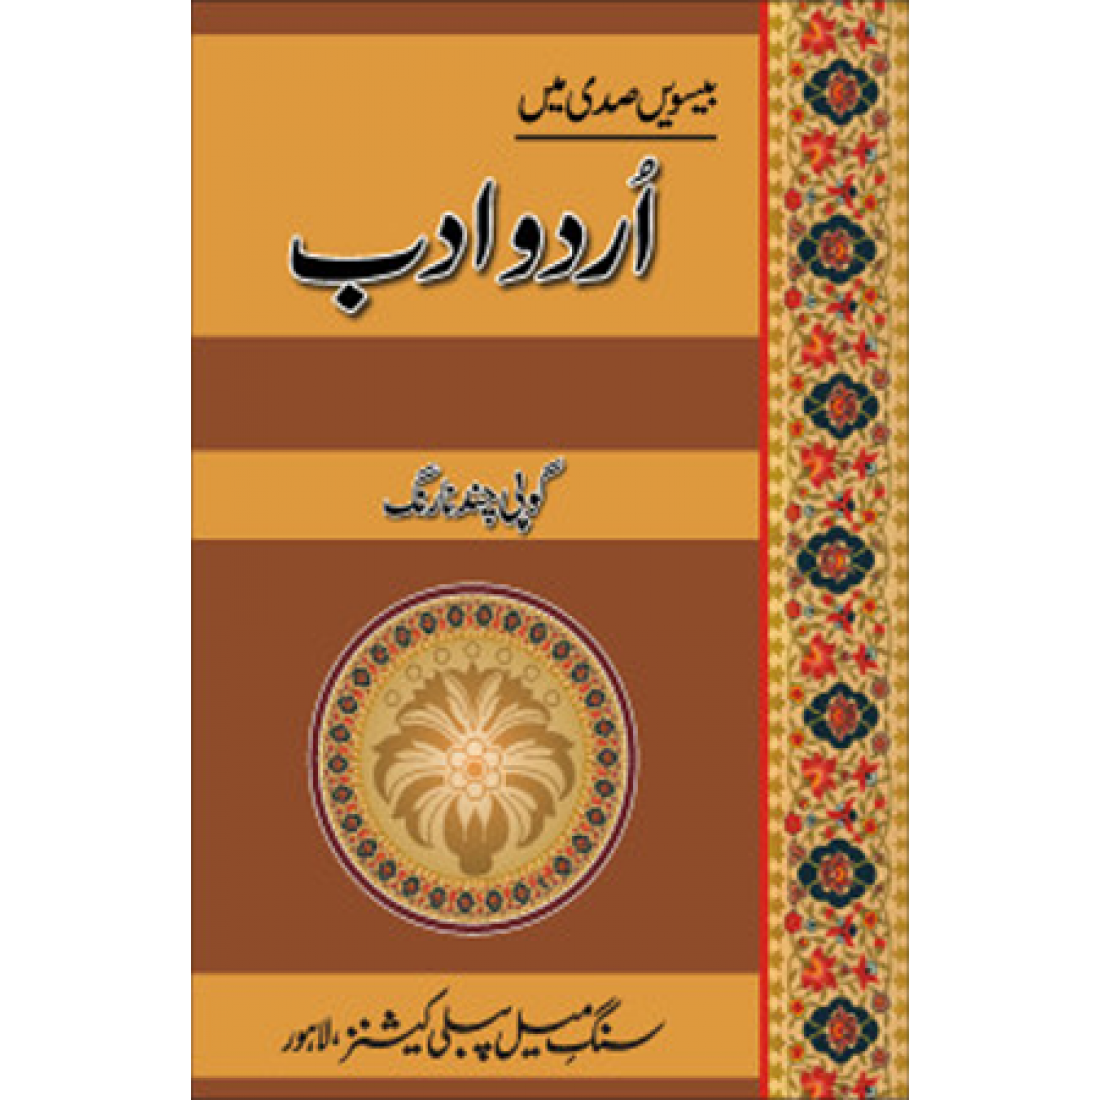 Beesvi Sadi Mai Urdu Adab by Dr. Gopi Chand Narang